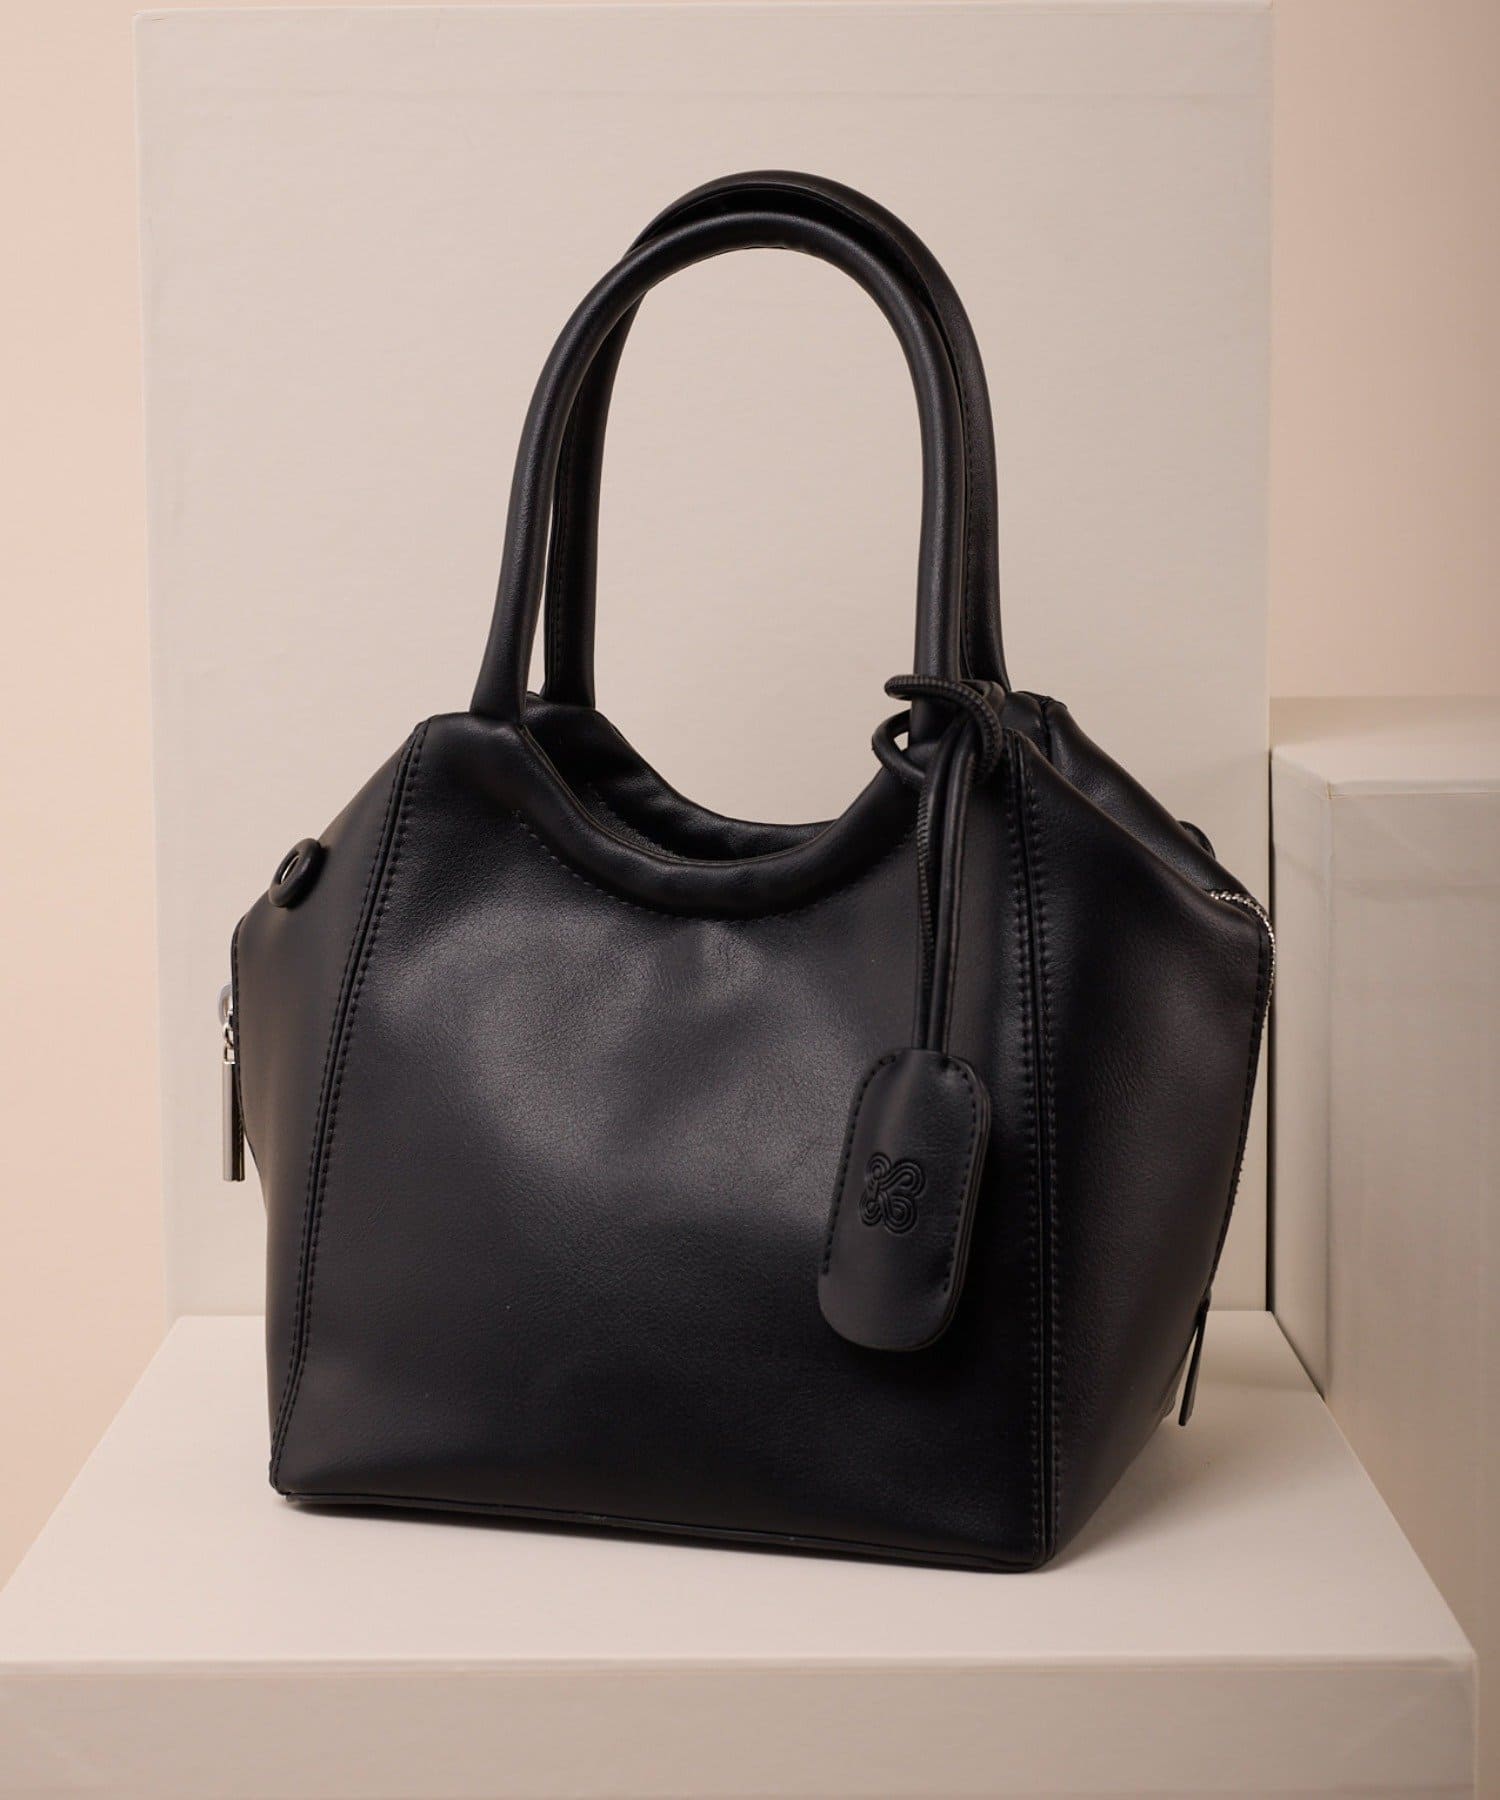 【Kolors like you】 fake leather 2way bag